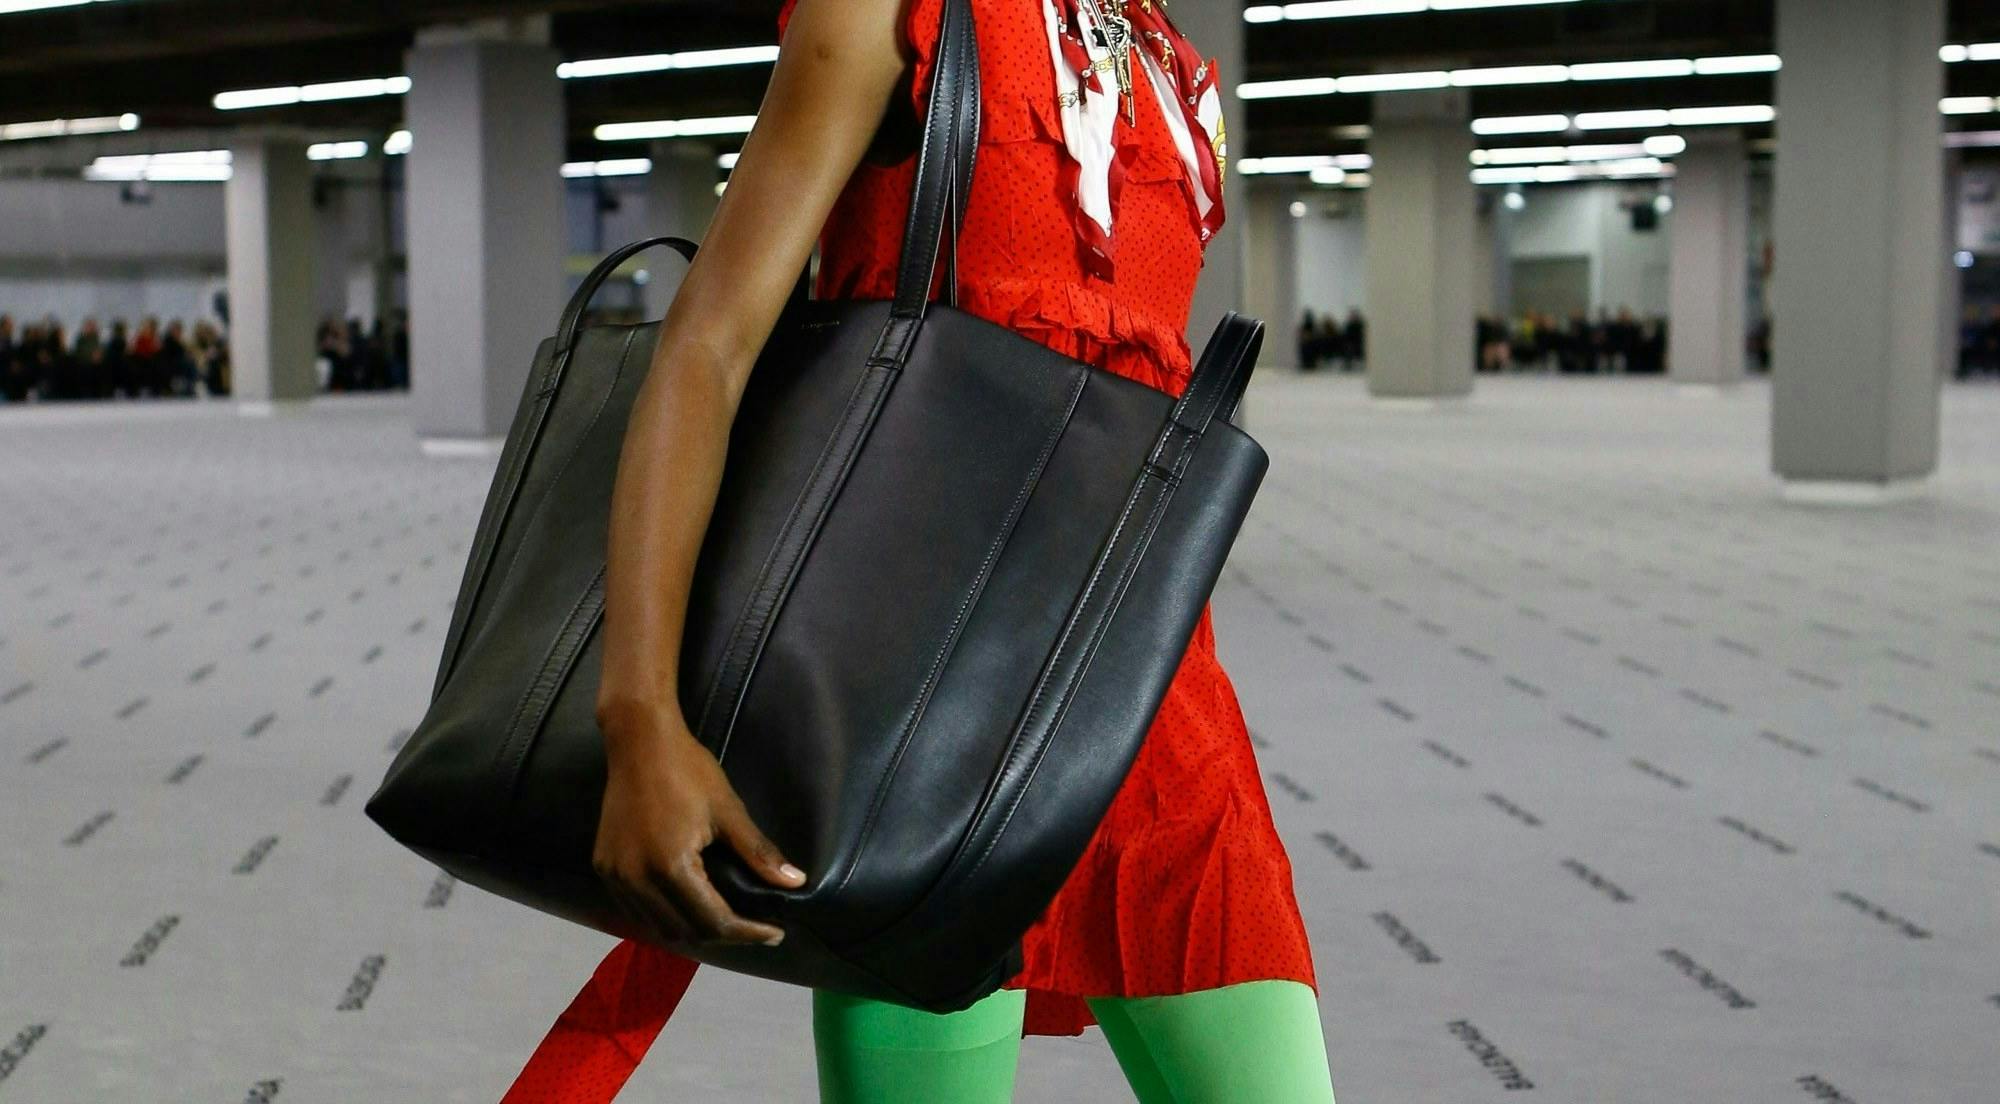 handbag bag accessories accessory clothing apparel person human purse